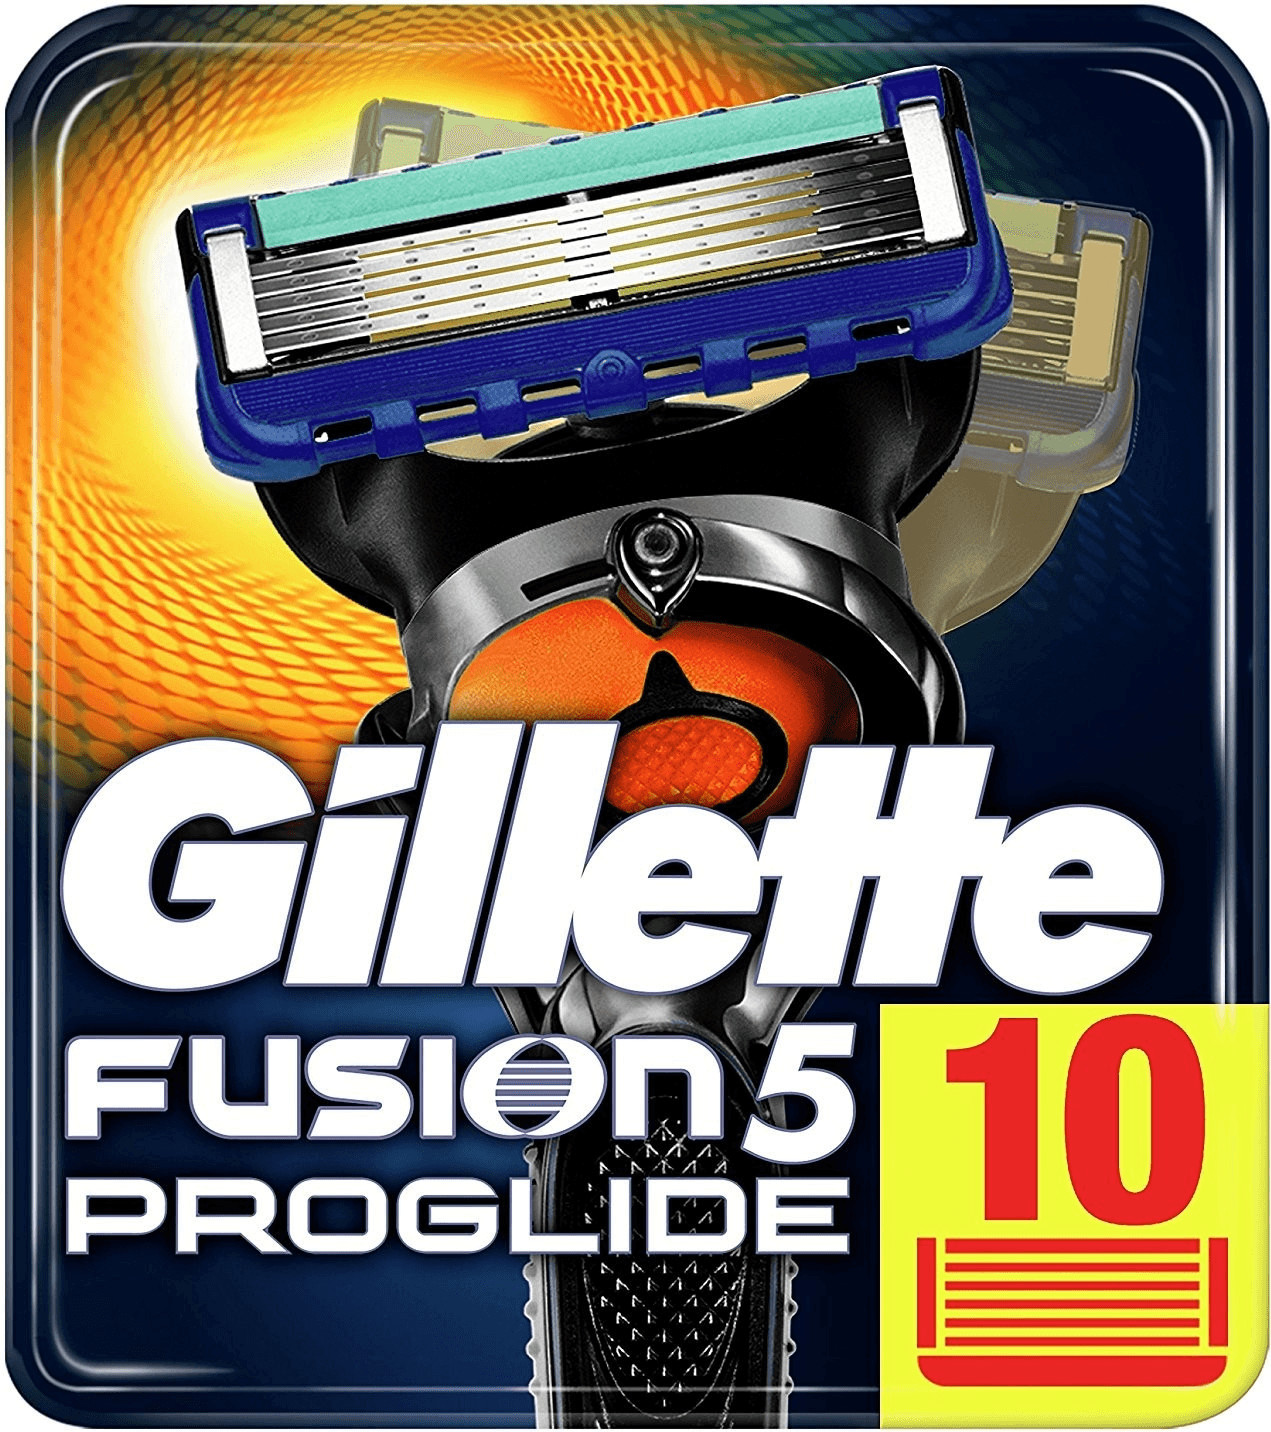 buy-gillette-fusion5-proglide-razor-blades-10pk-from-22-95-today